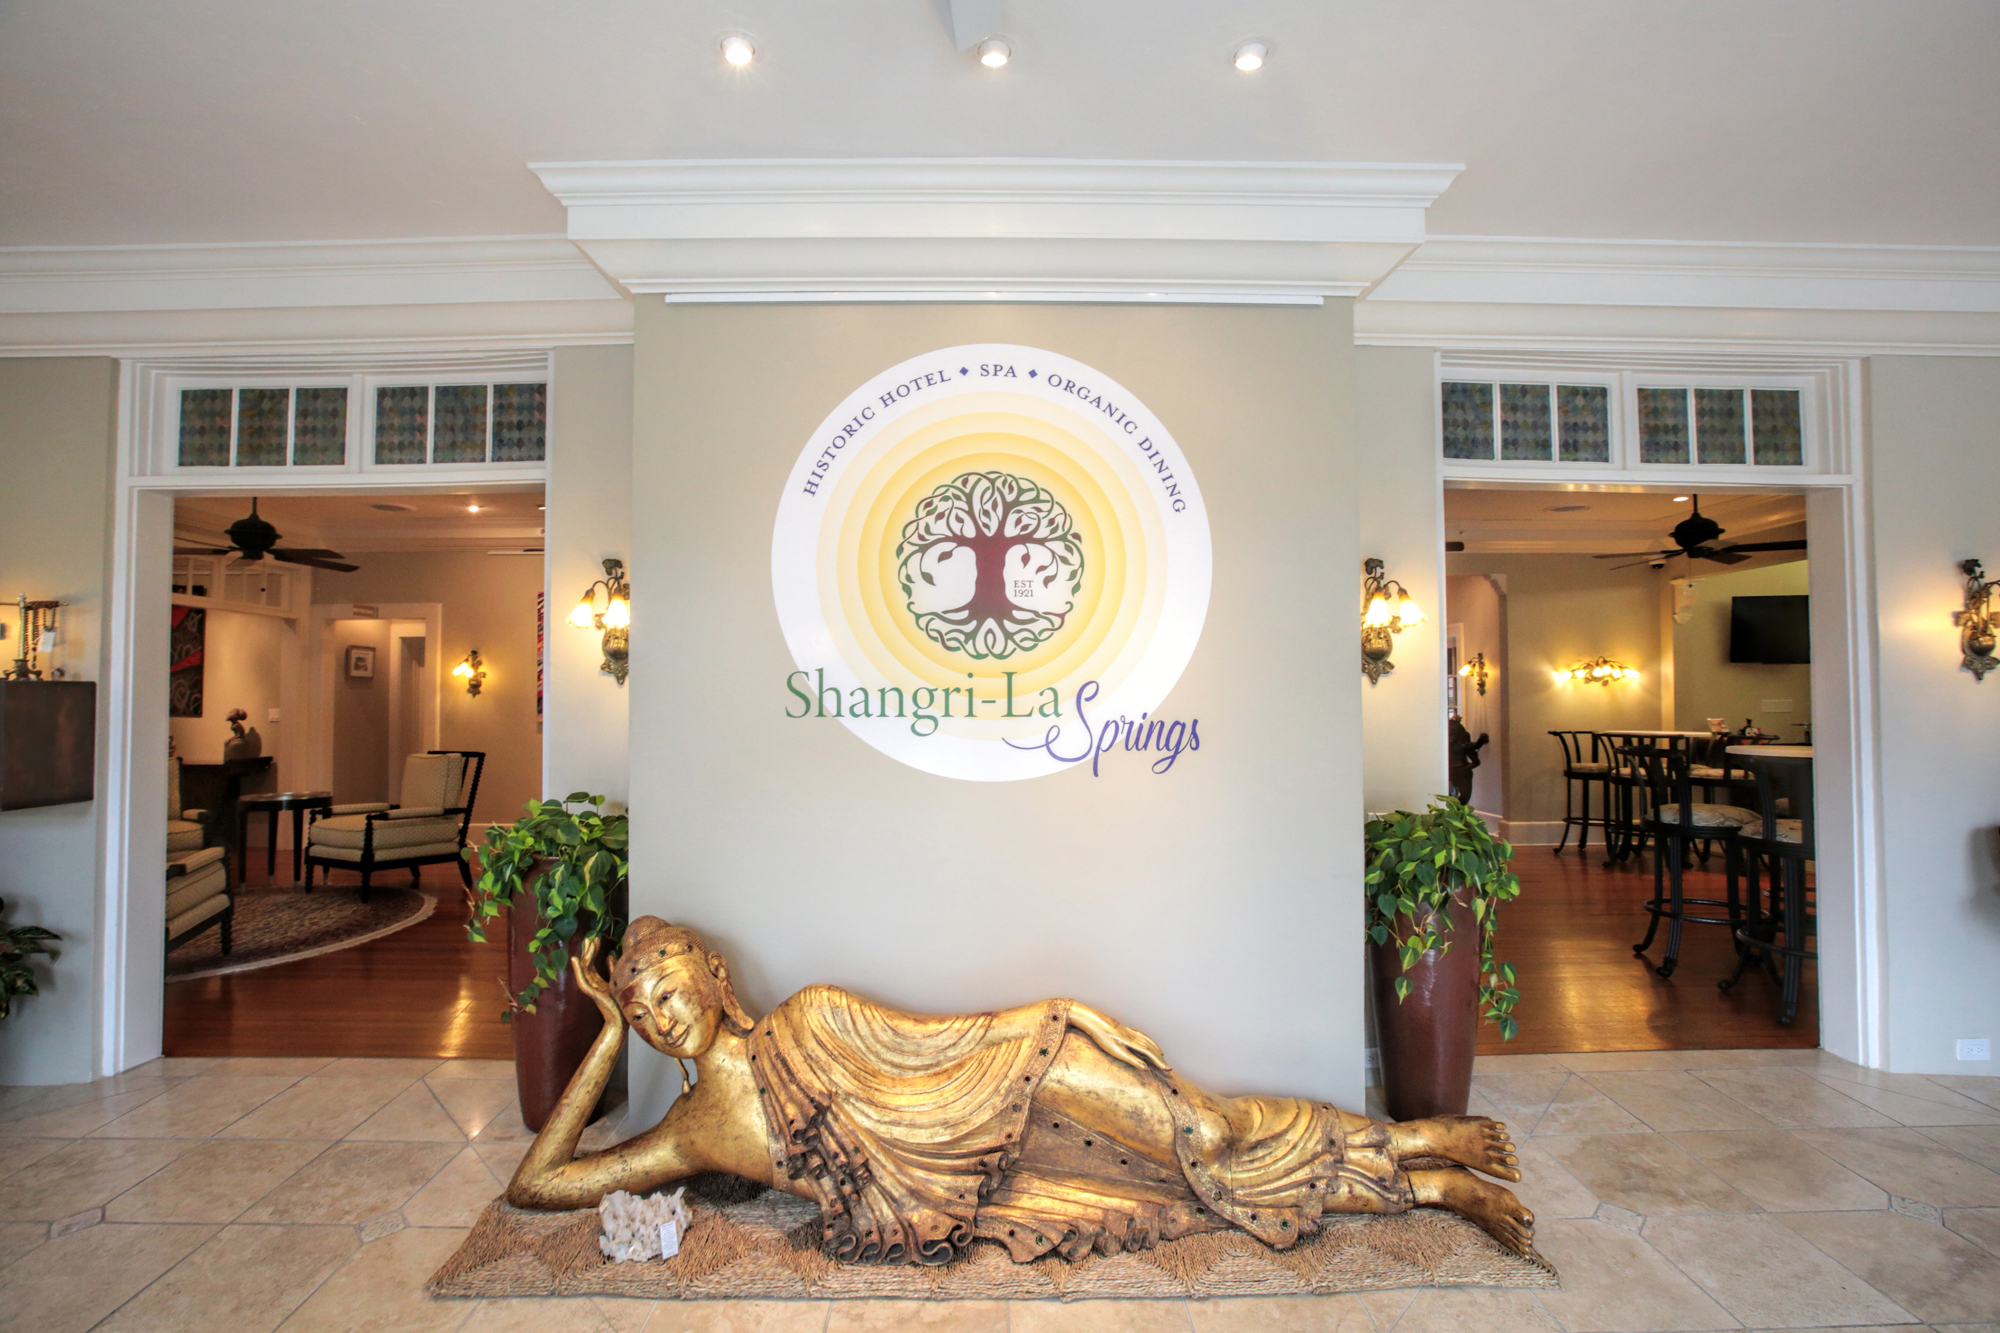 Stefania Pifferi.  Renovations are underway at the Shangri-La Springs.